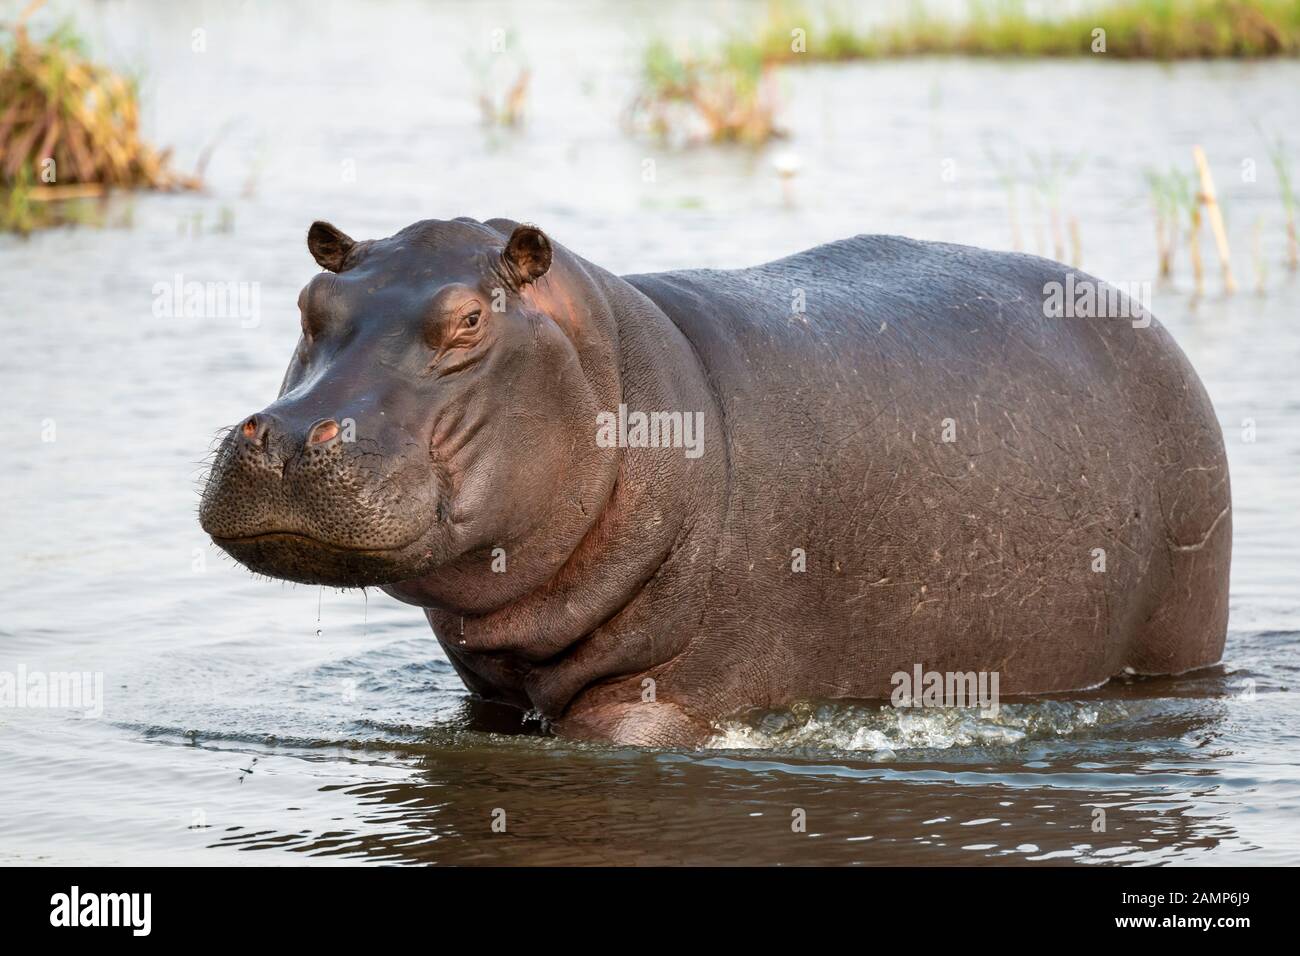 Hippopotamus (Hippopotamus amphibius) standing in shallow water in Moremi Game Reserve, Okavango Delta, Botswana, Southern Africa Stock Photo